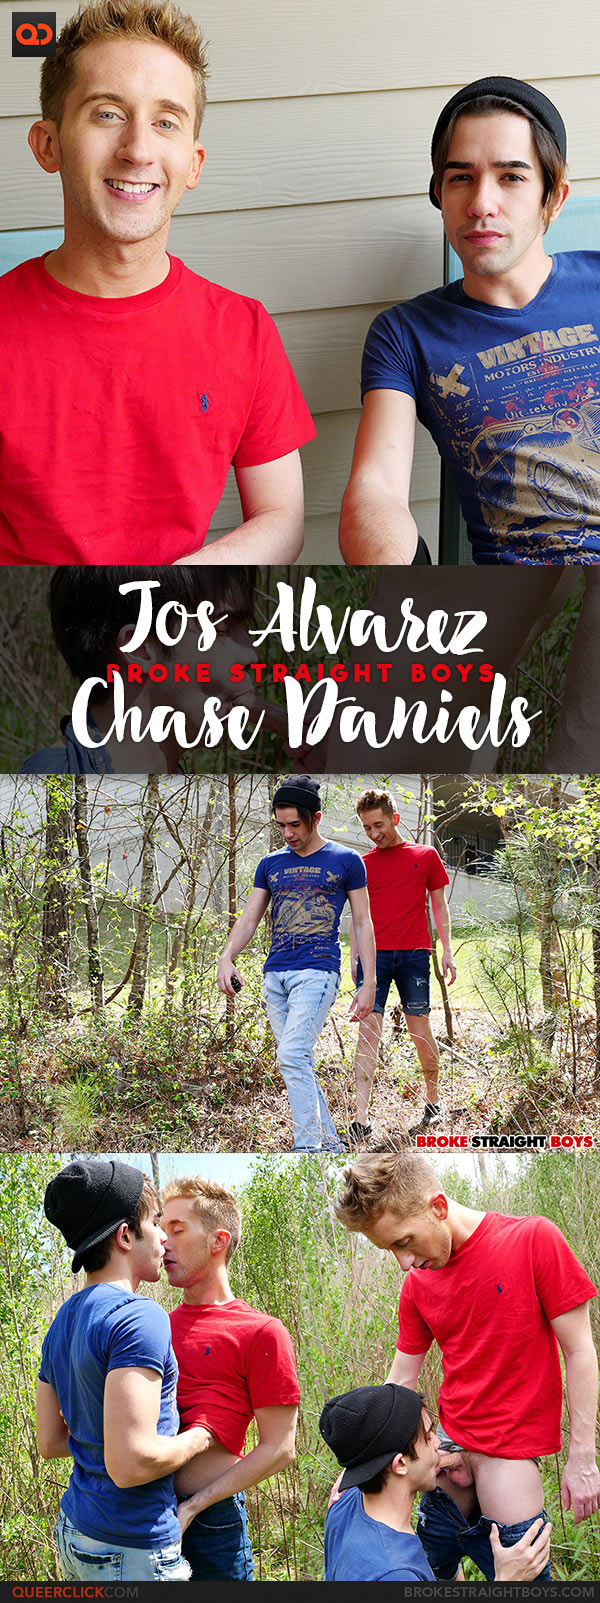 Broke Straight Boys: Jos Alvarez and Chase Daniels - Oral